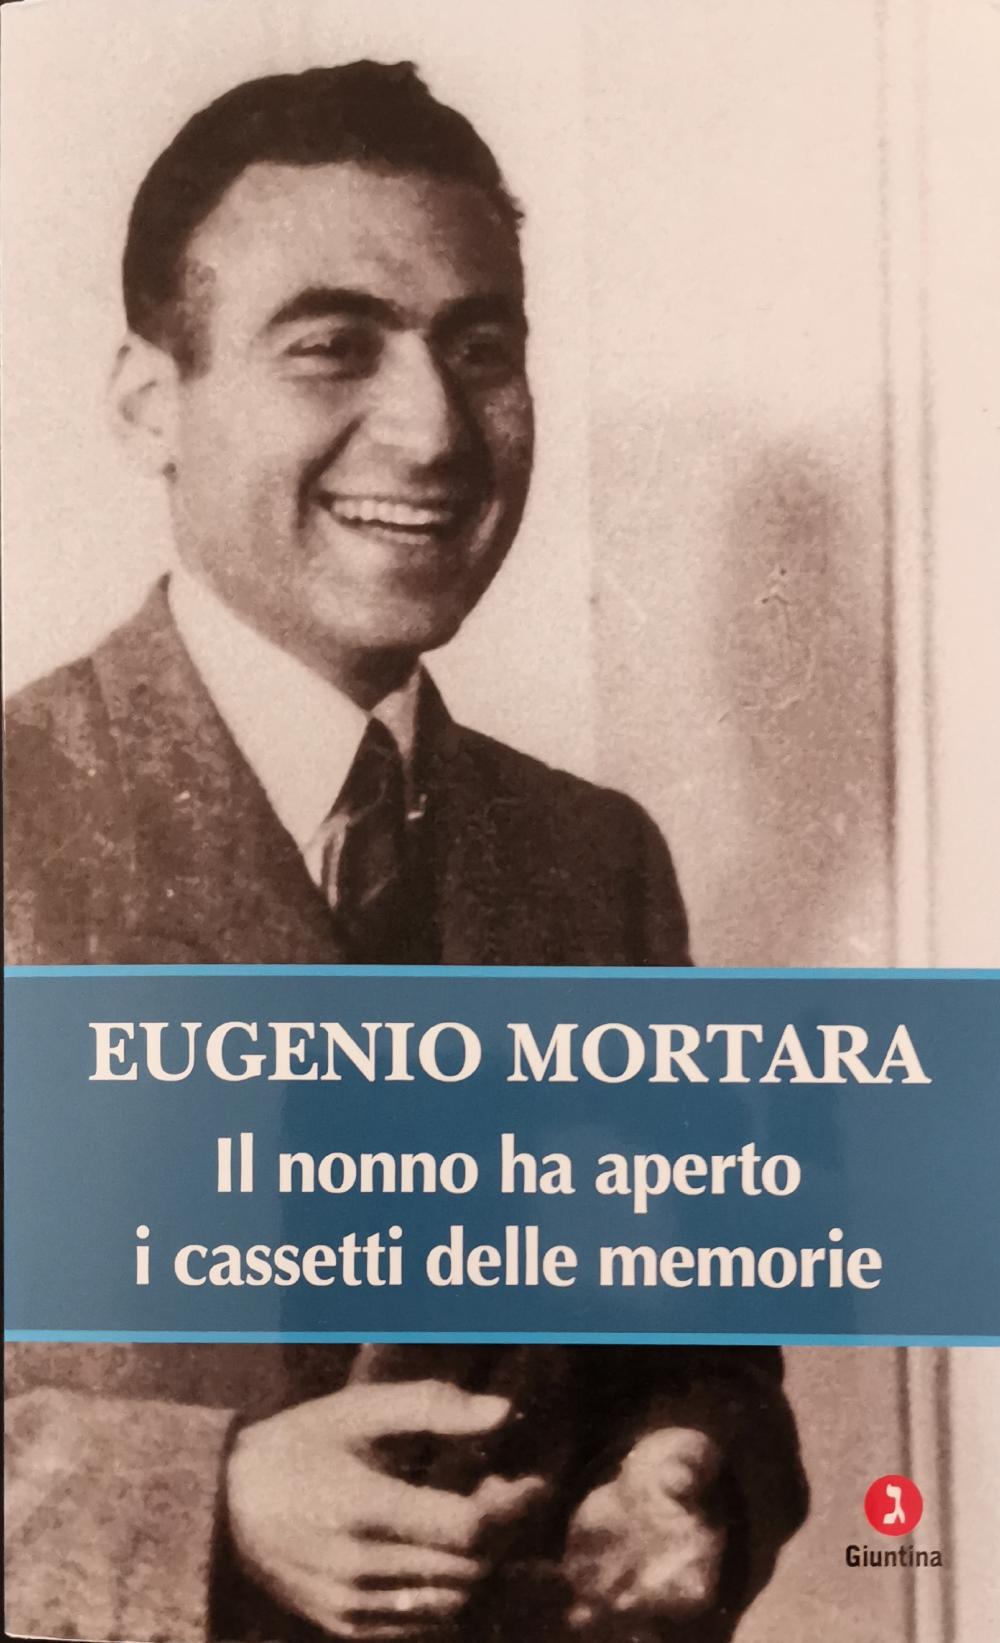 Eugenio Mortara